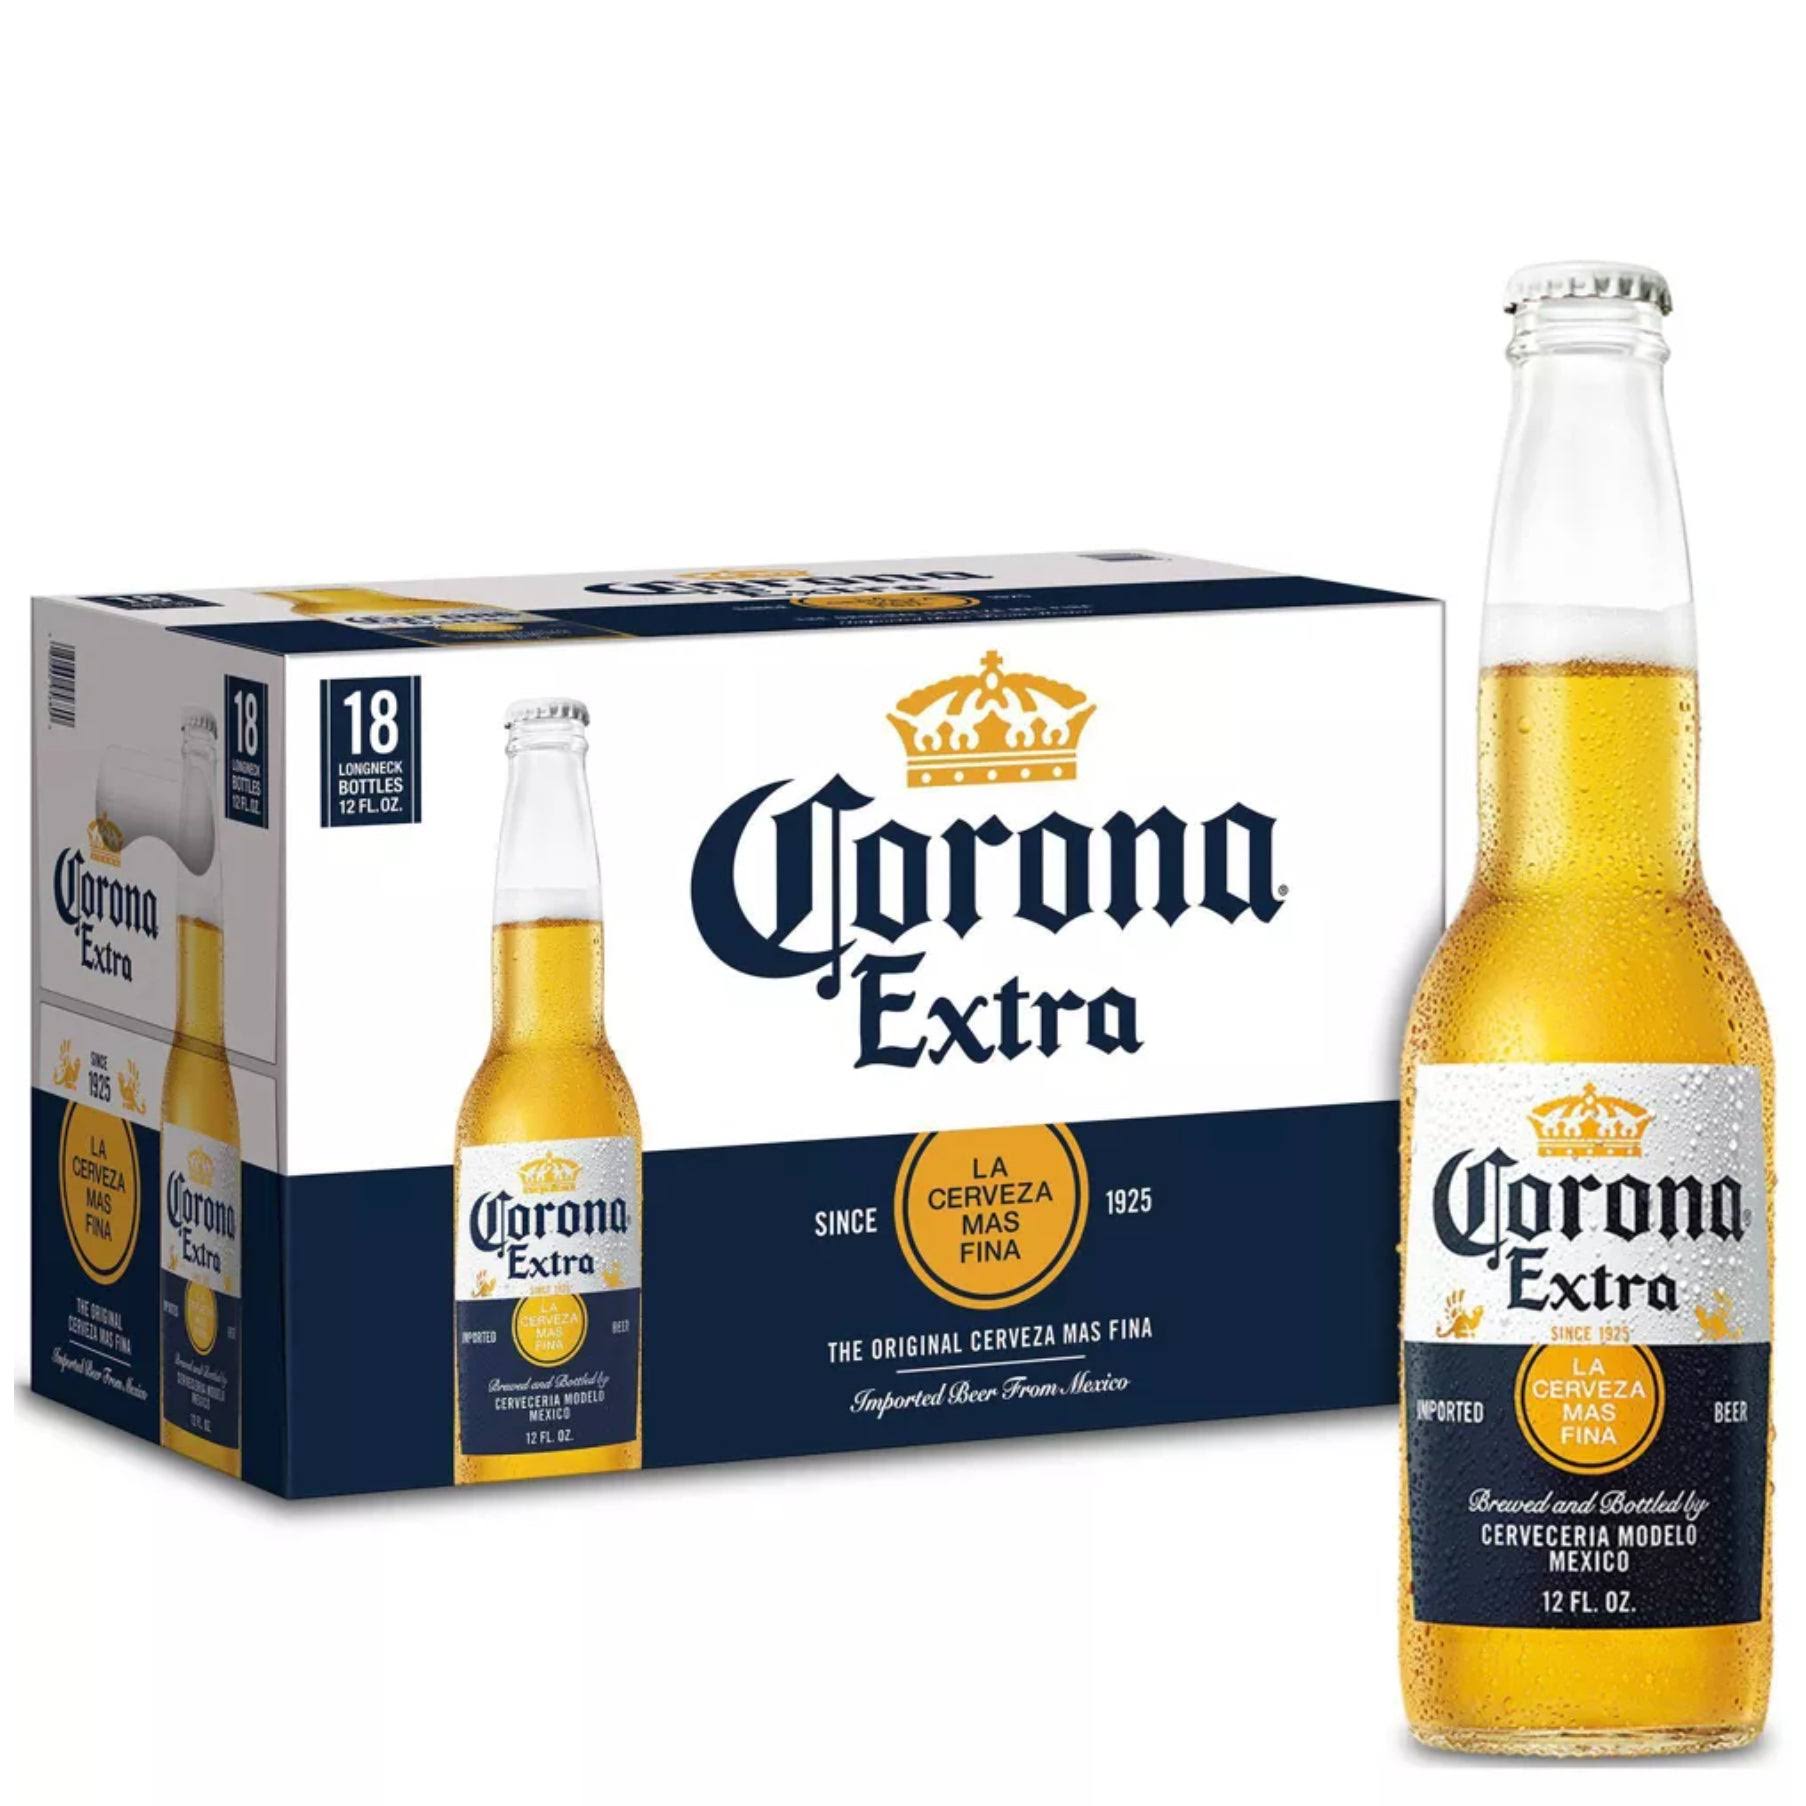 Corona Extra Beer - 18 pack, 12 fl oz bottles